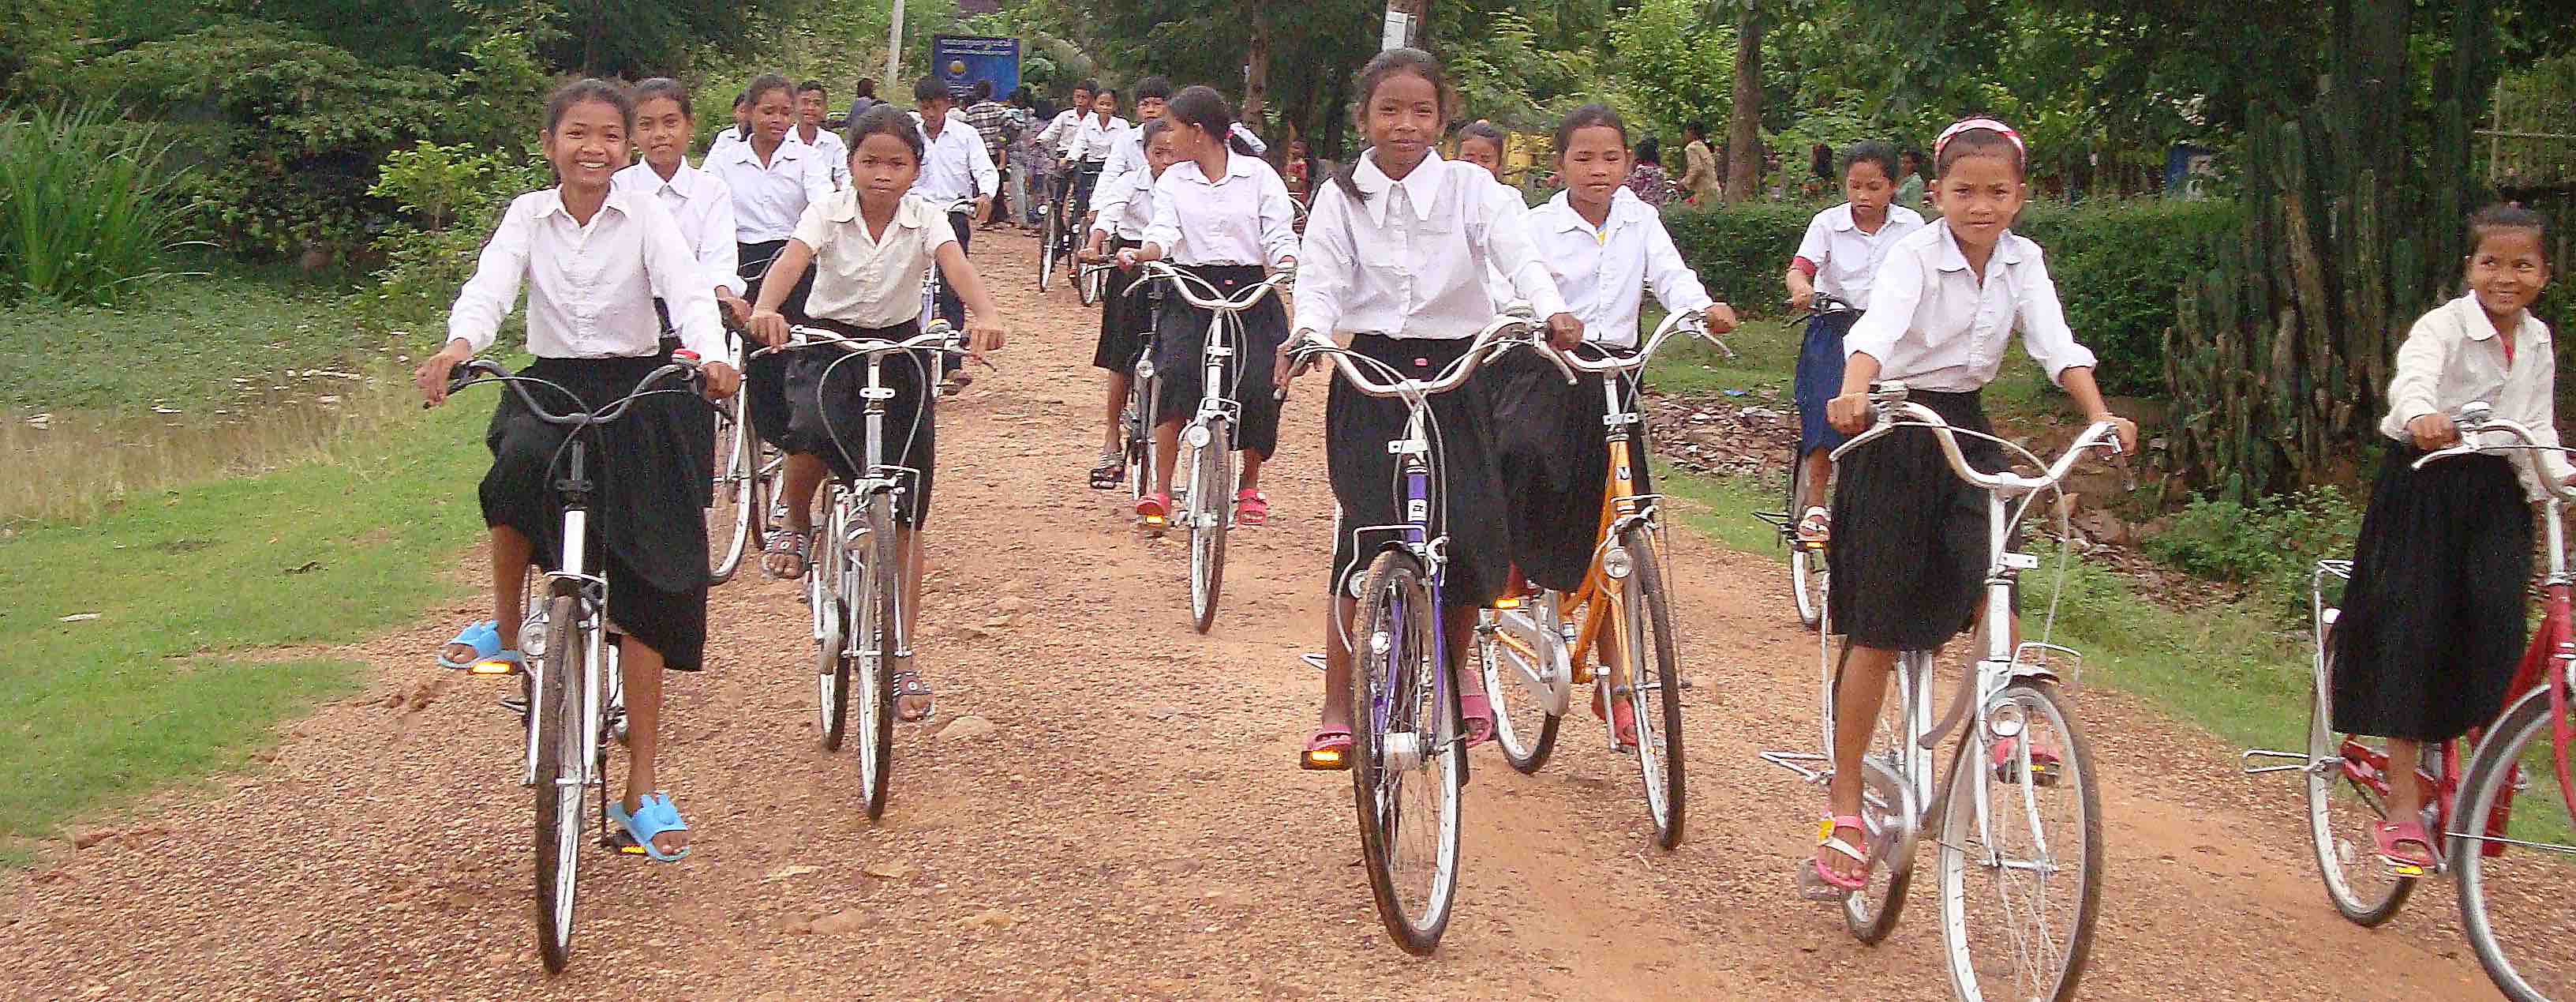 Cambodia - Children riding to school on bikes.